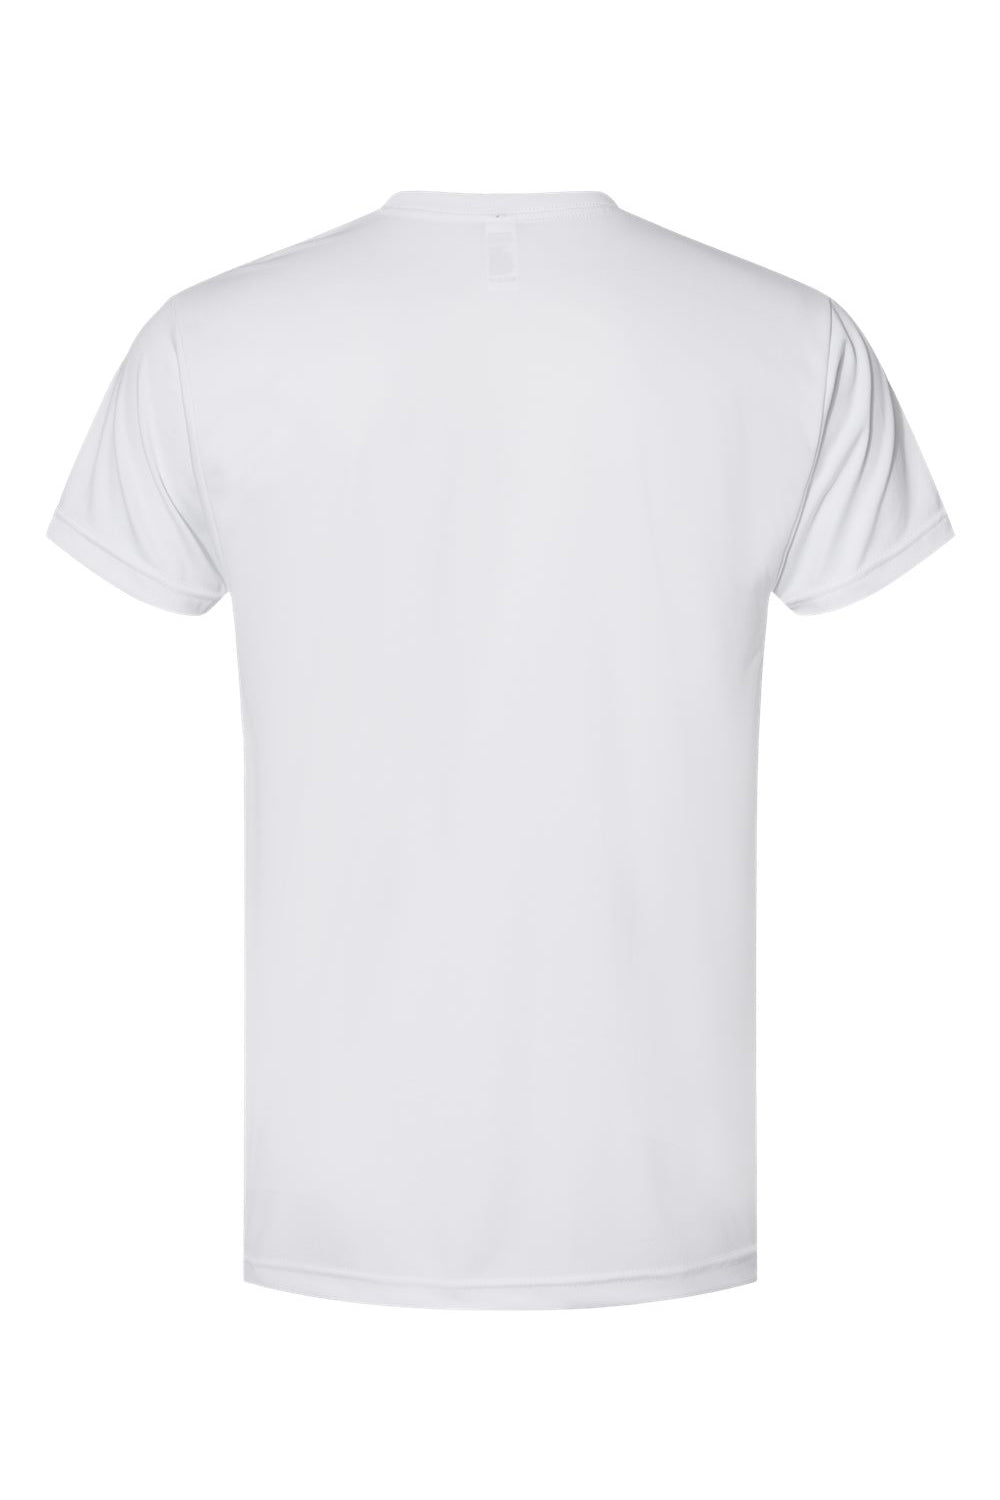 Bayside 5300 Mens USA Made Performance Short Sleeve Crewneck T-Shirt White Flat Back